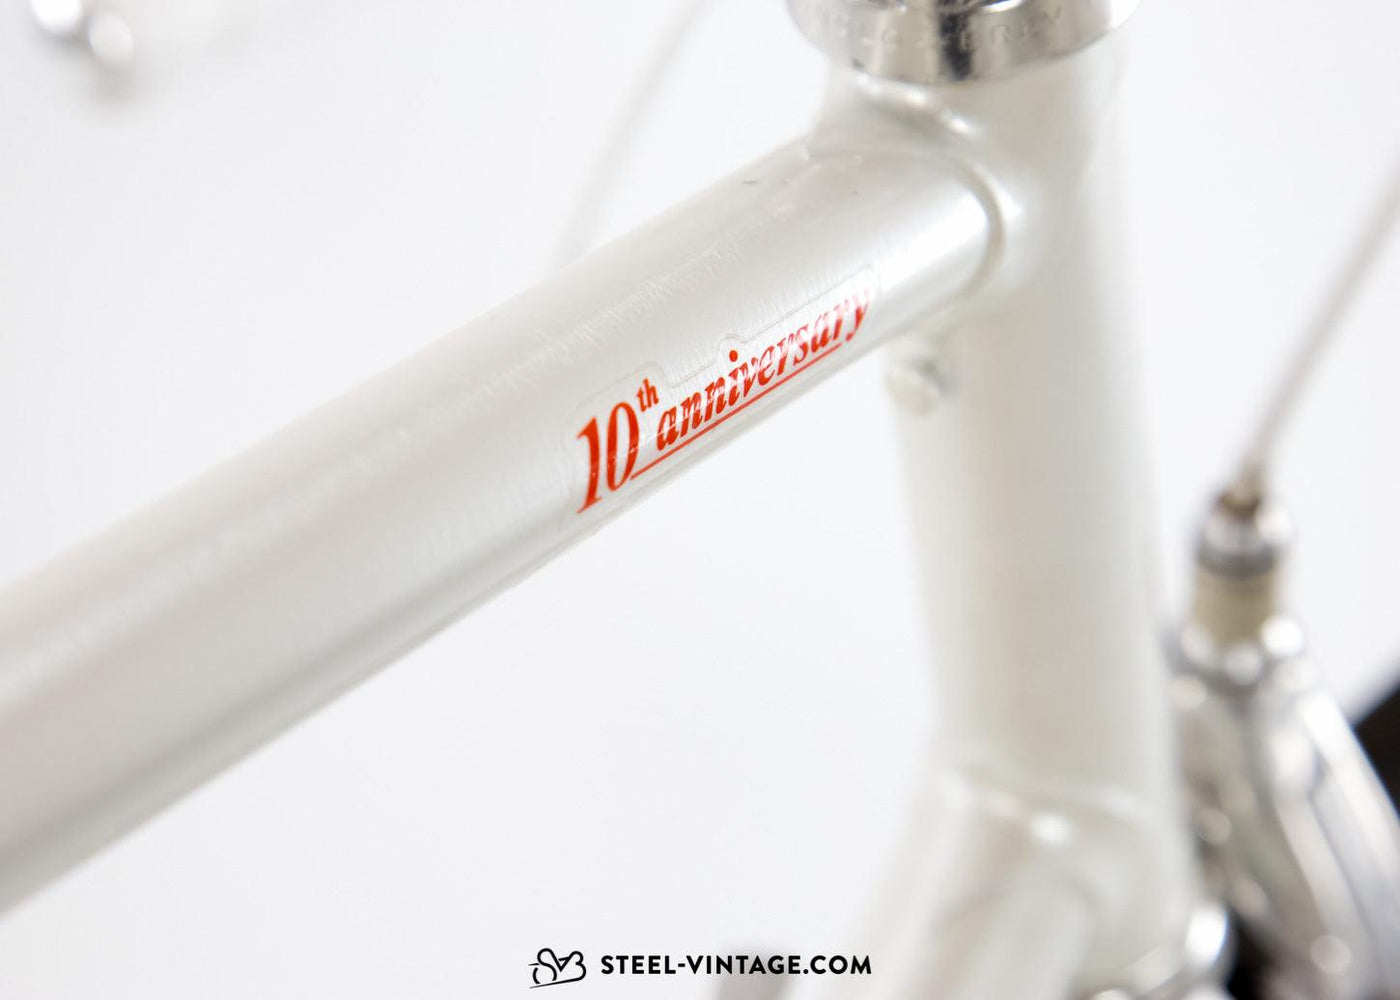 Eddy Merckx Corsa Extra 10th Anniversary Road Bike - Steel Vintage Bikes